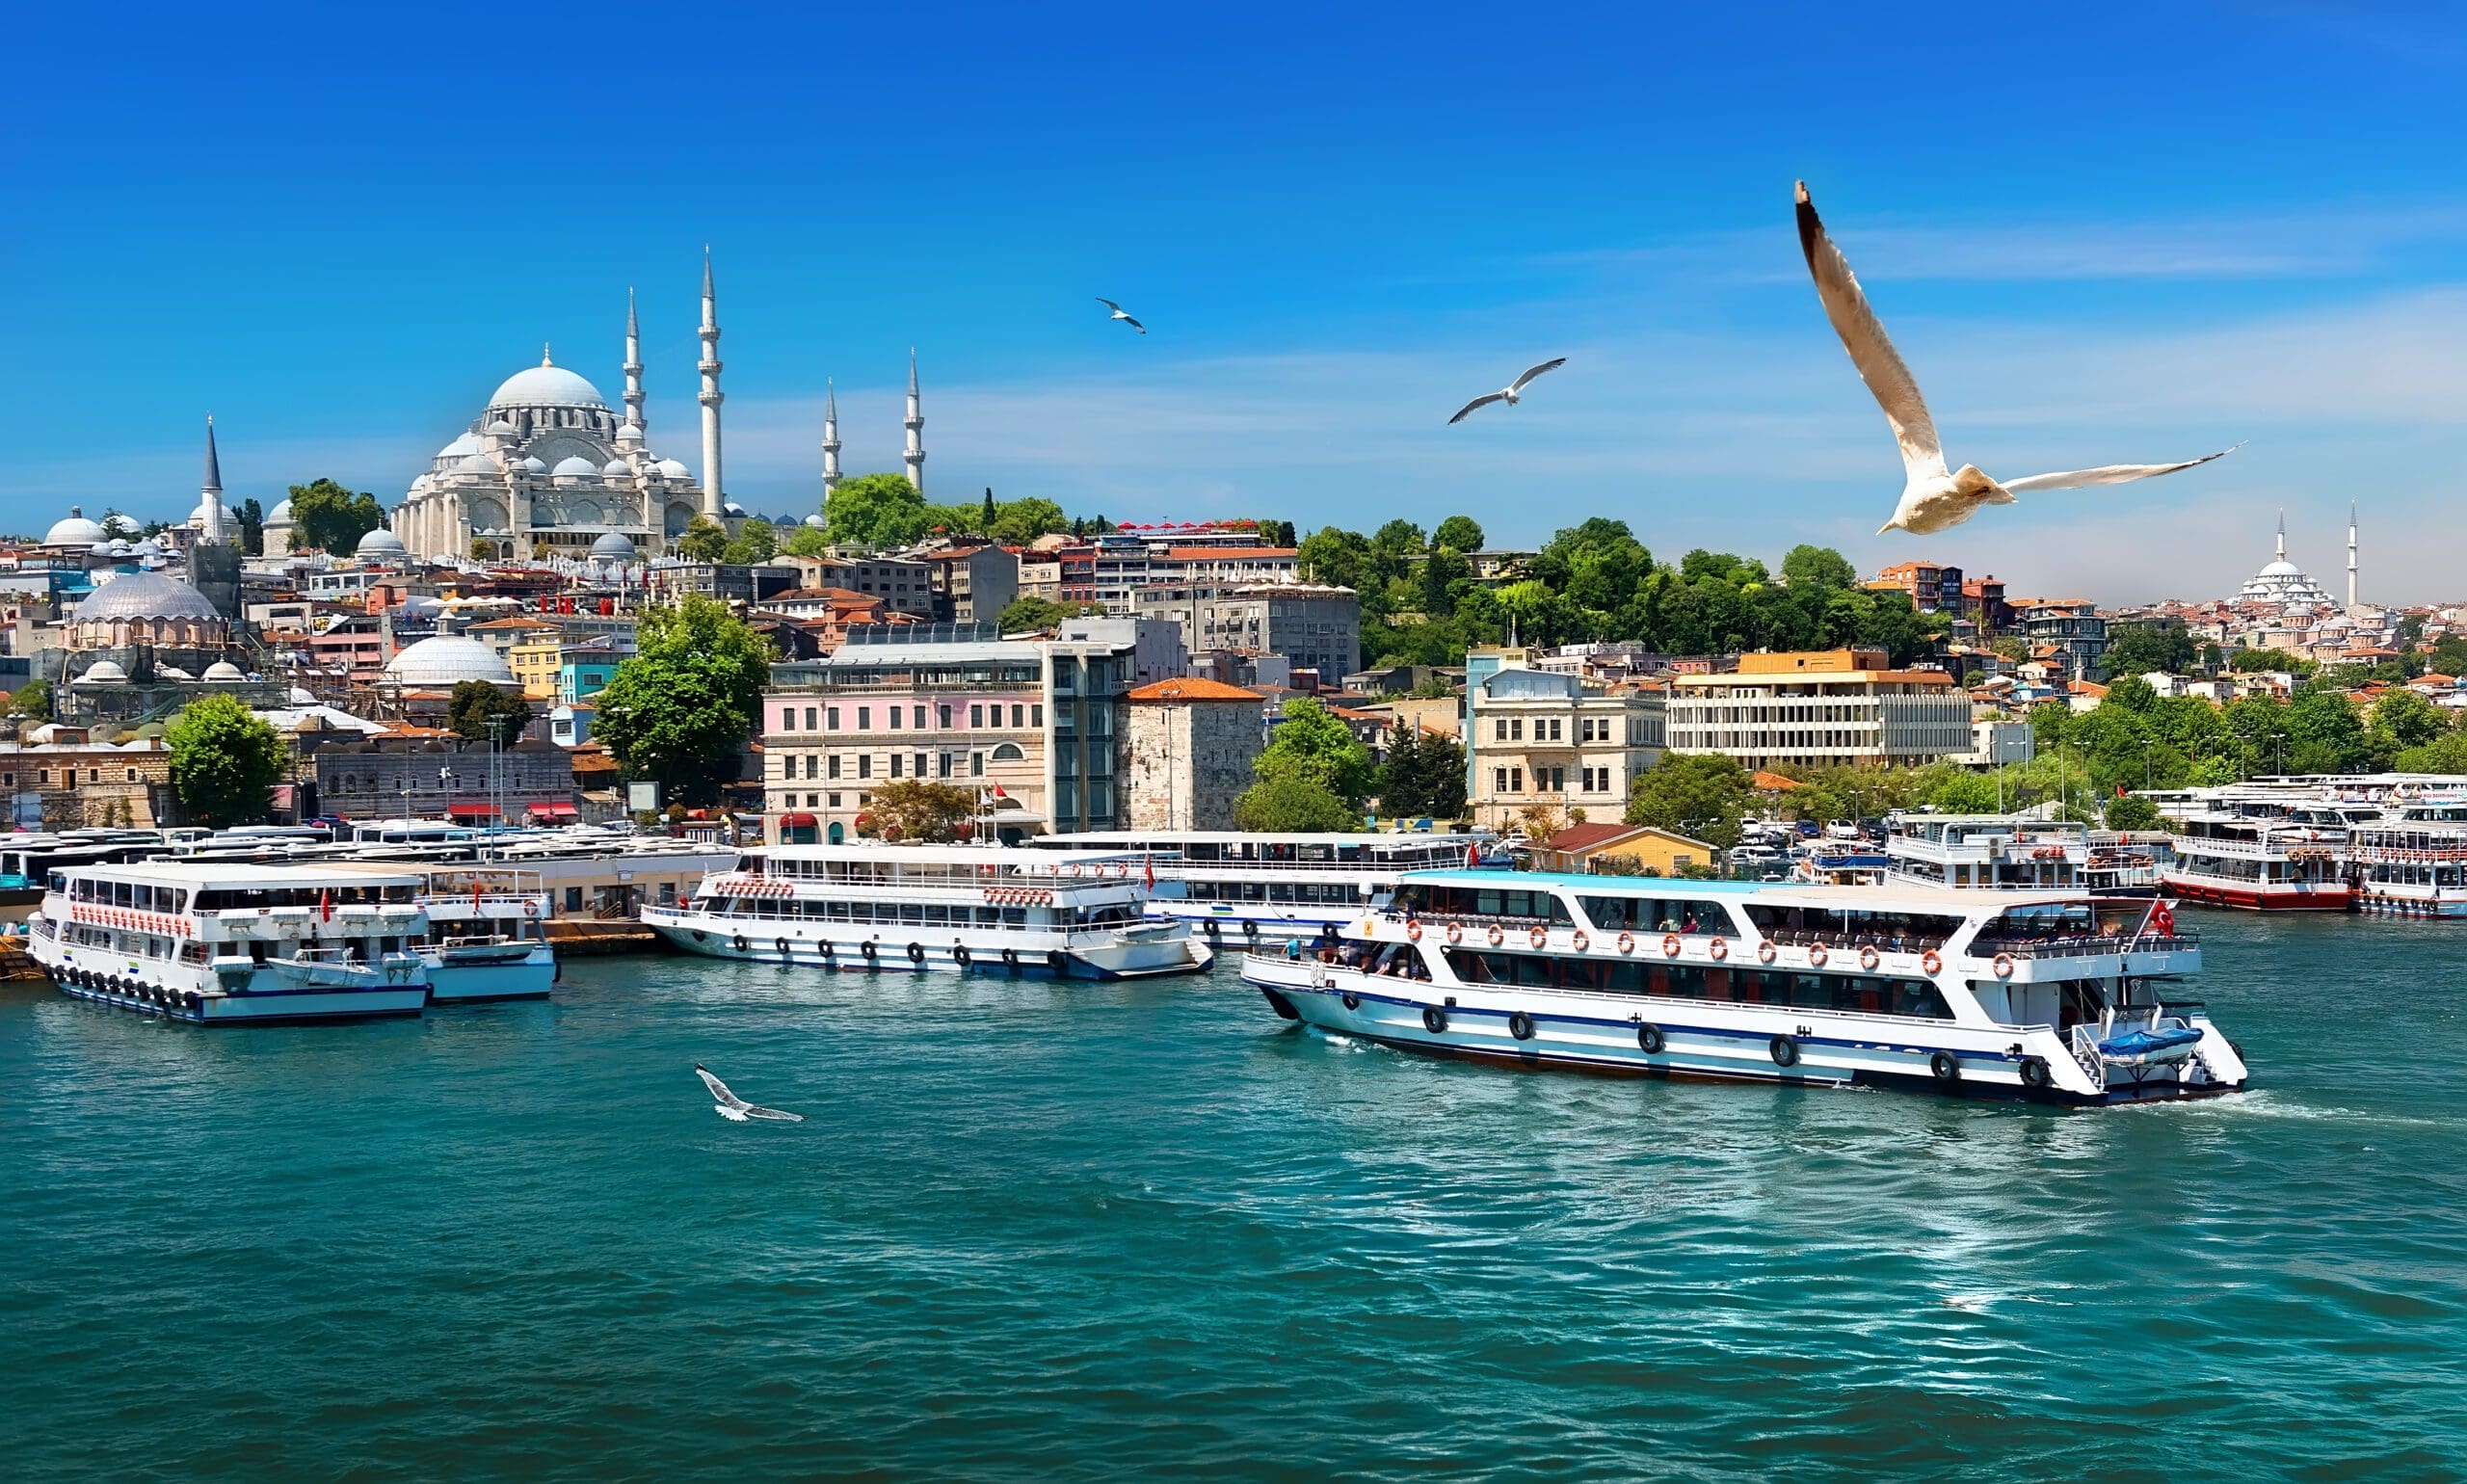 boats-in-istanbul-2021-08-26-17-20-02-ut